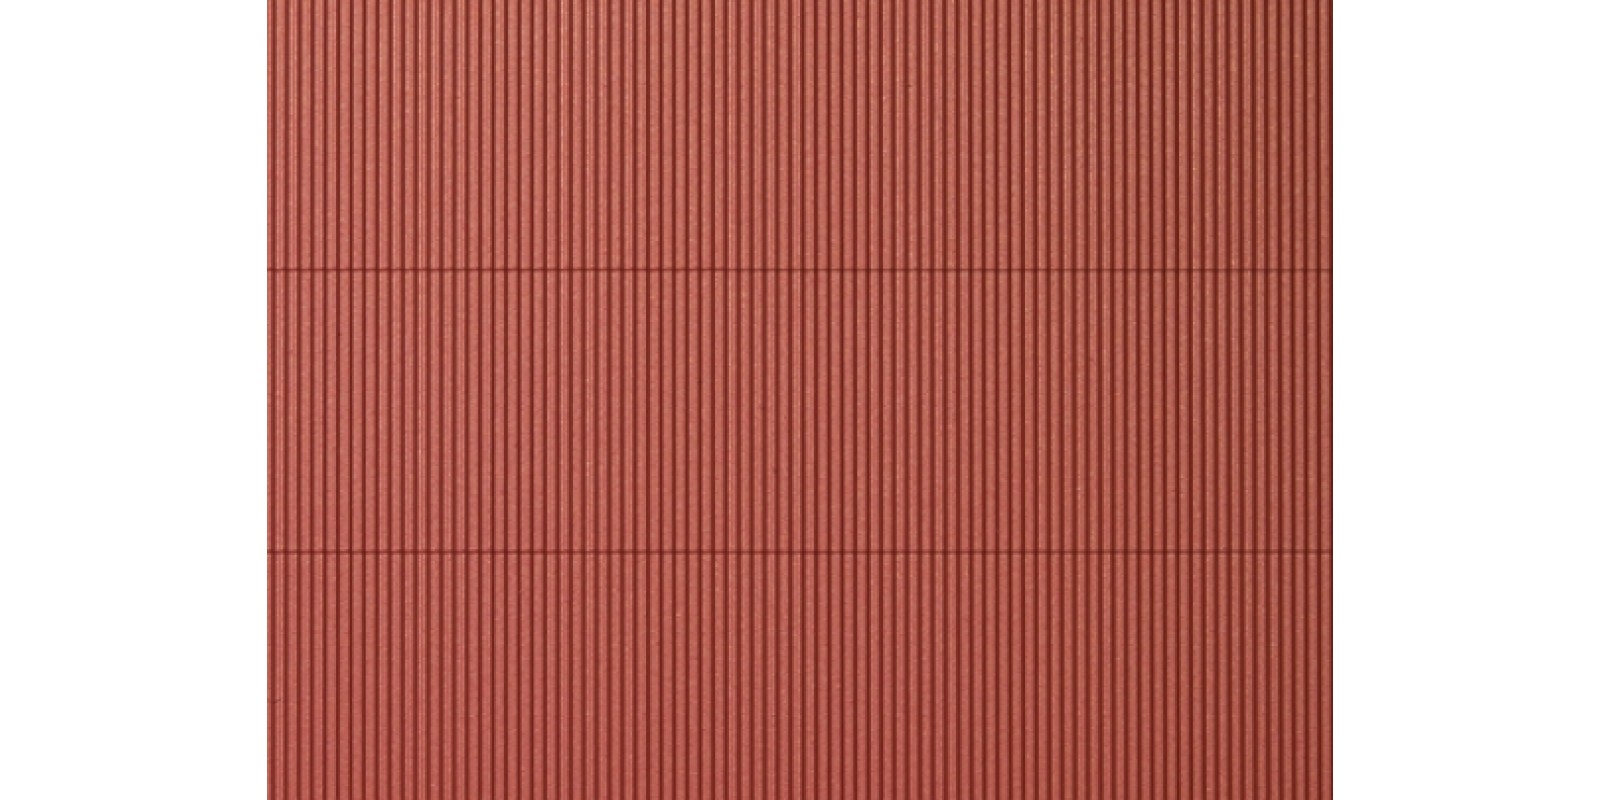 AU52430 1 corrugated iron reddish brown single